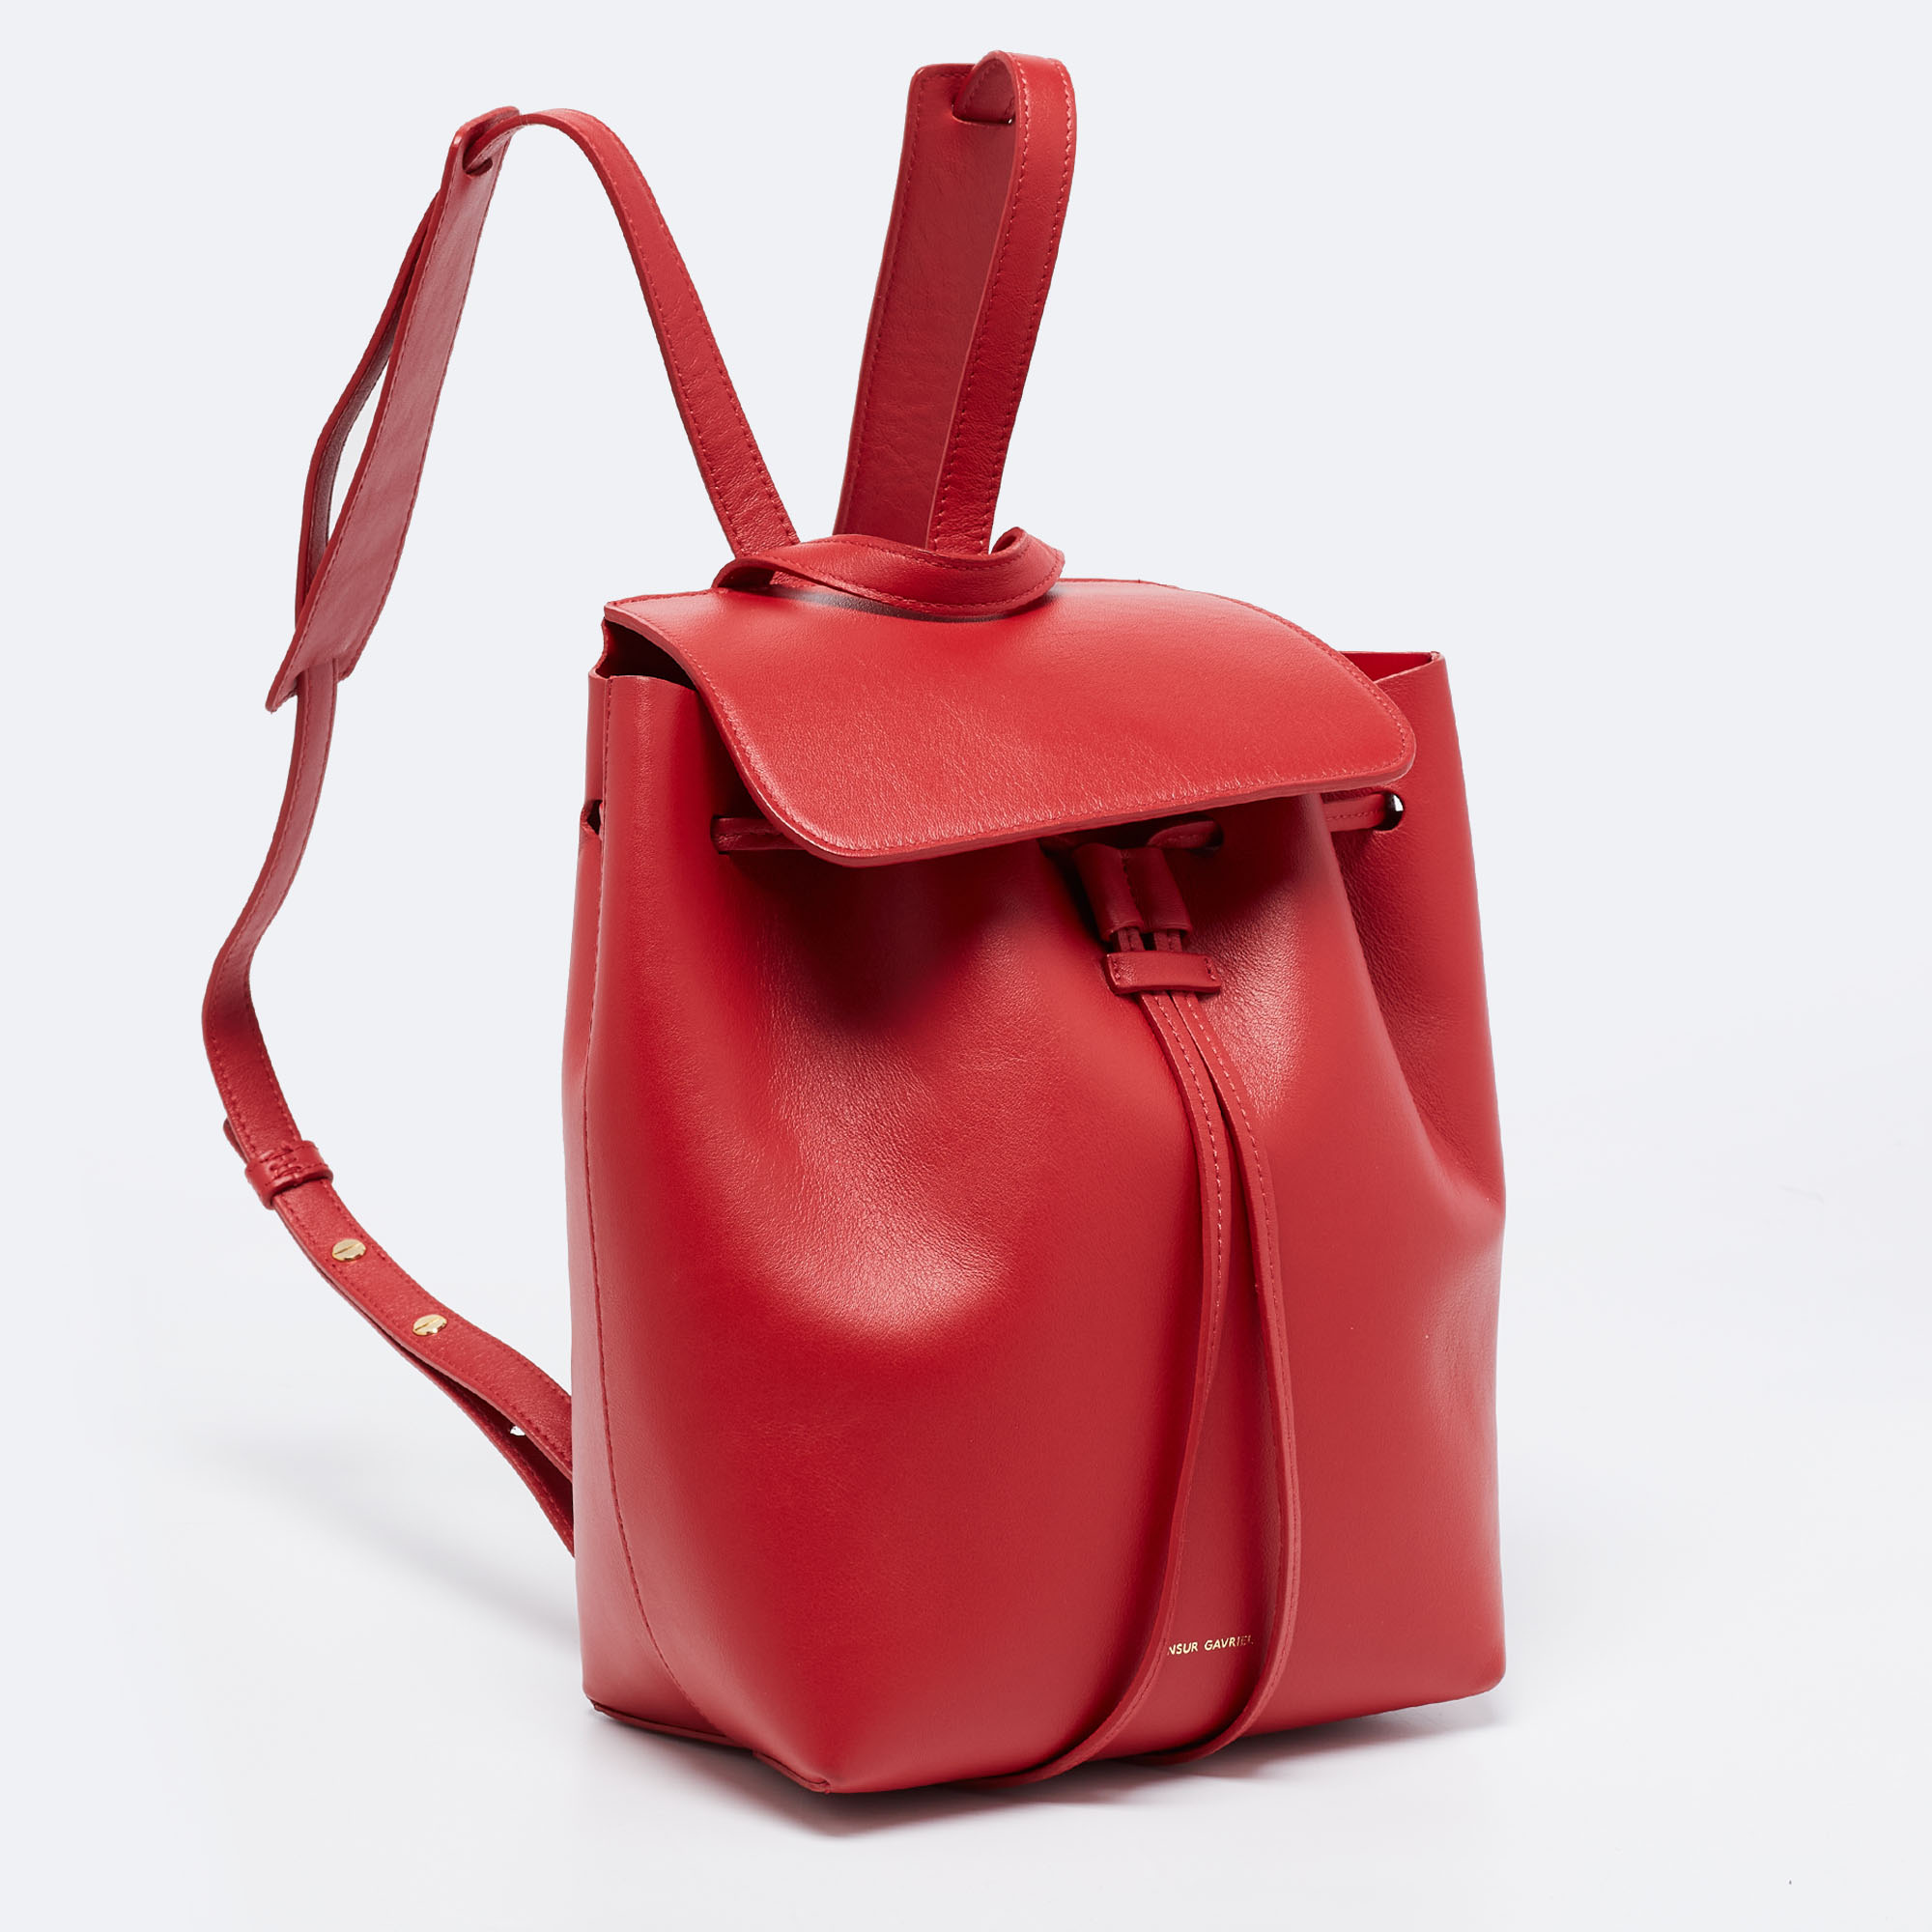 Mansur Gavriel Red Leather Mini Backpack